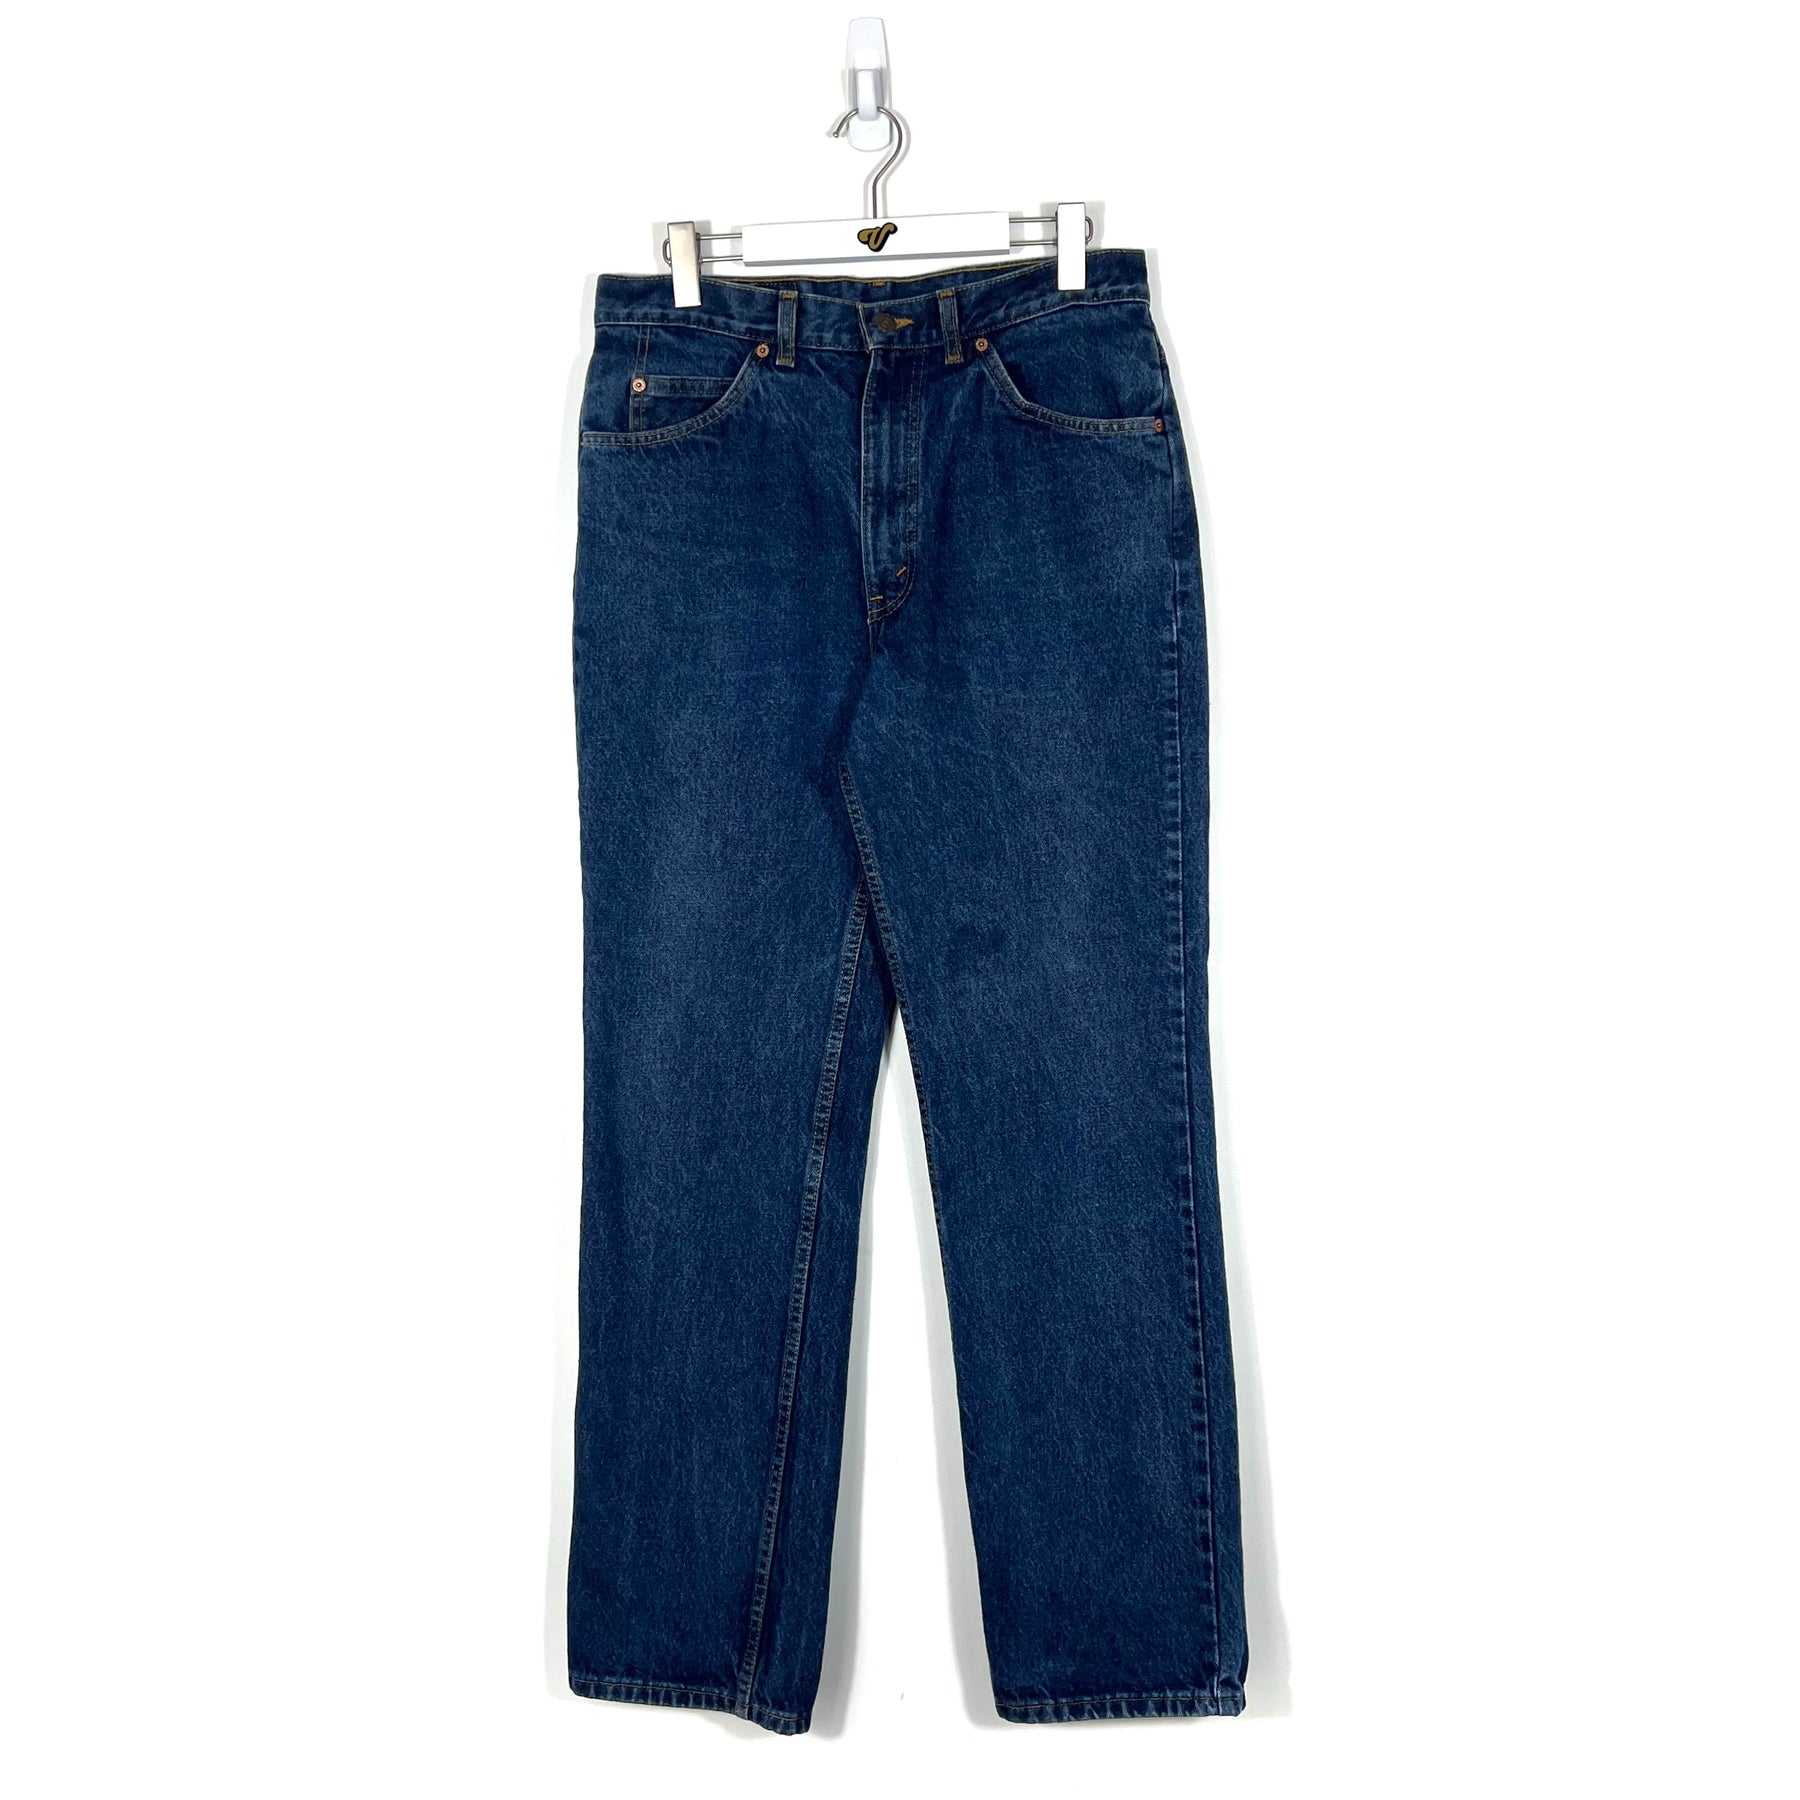 : Vintage Levis Orange Tab Jeans - Men's 34/32